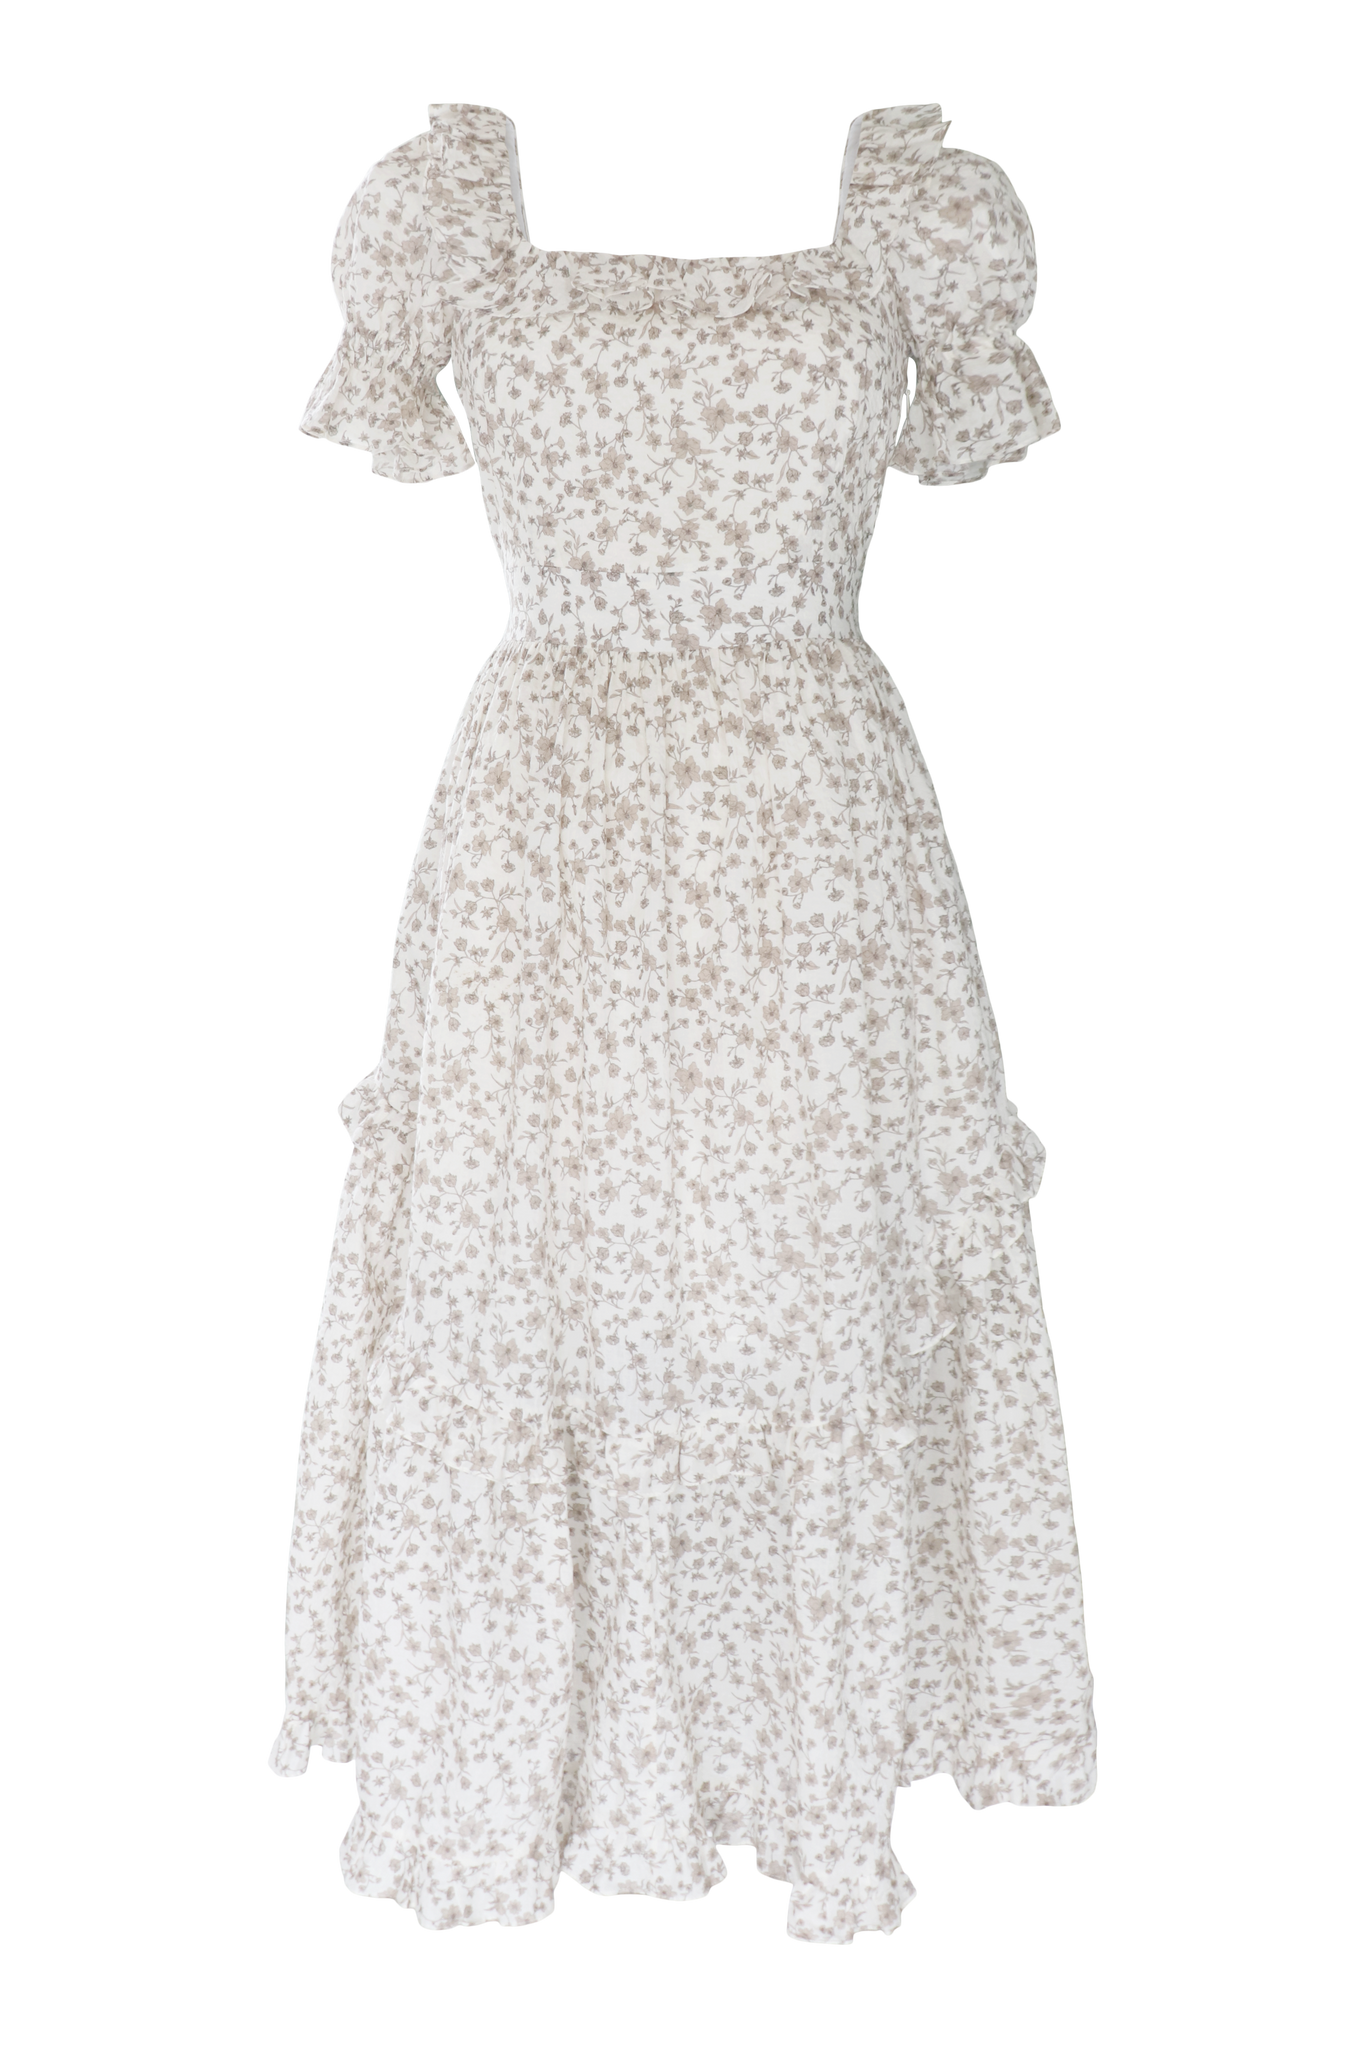 Adeline Dress in White Floral